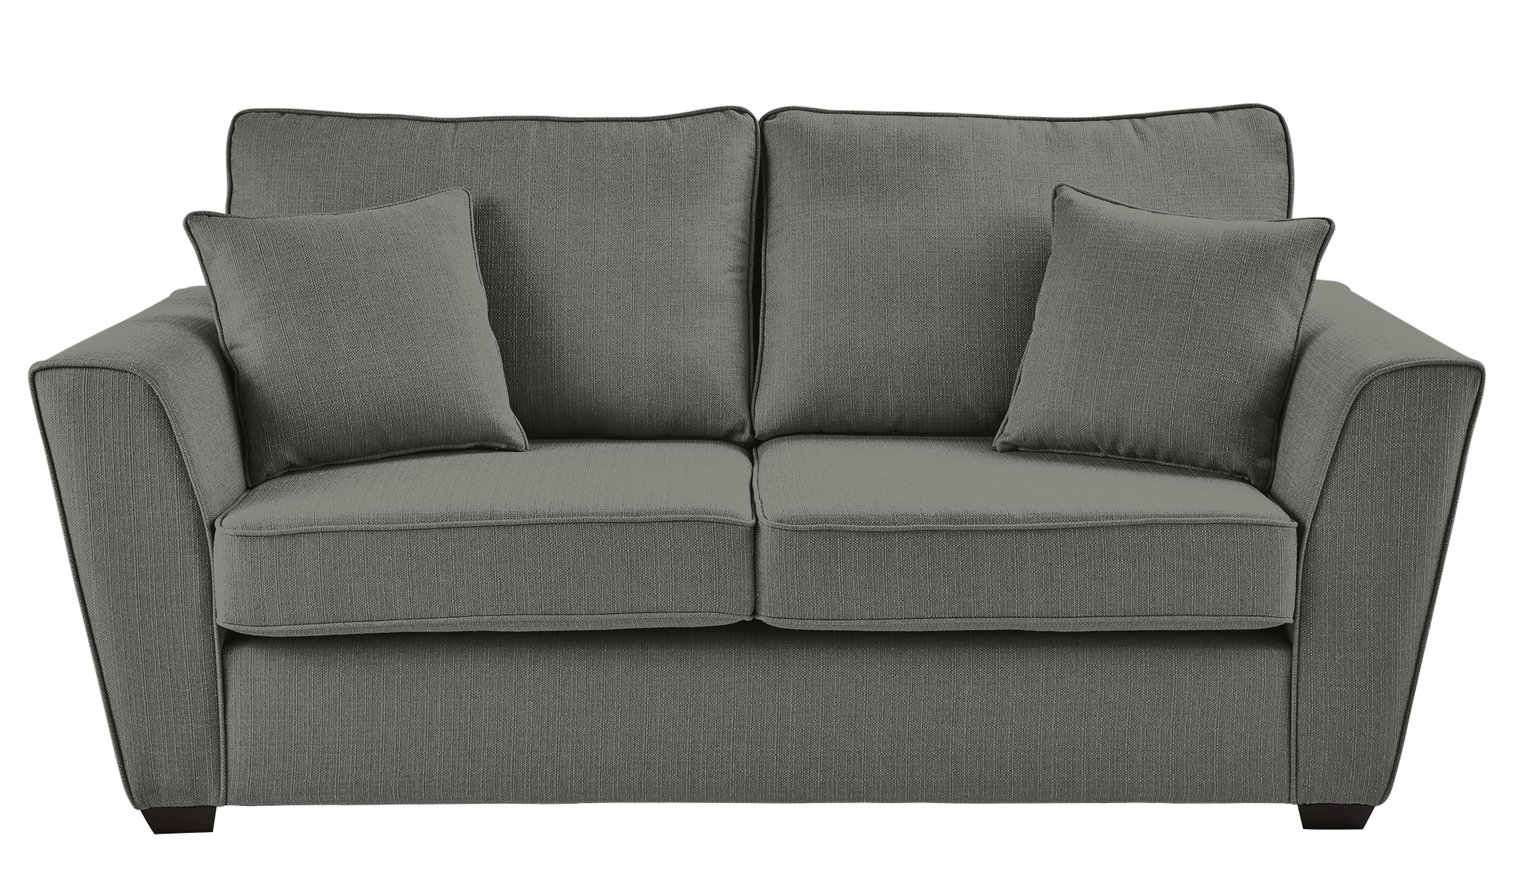 Argos Home Renley 2 Seater Fabric Sofa - Charcoal